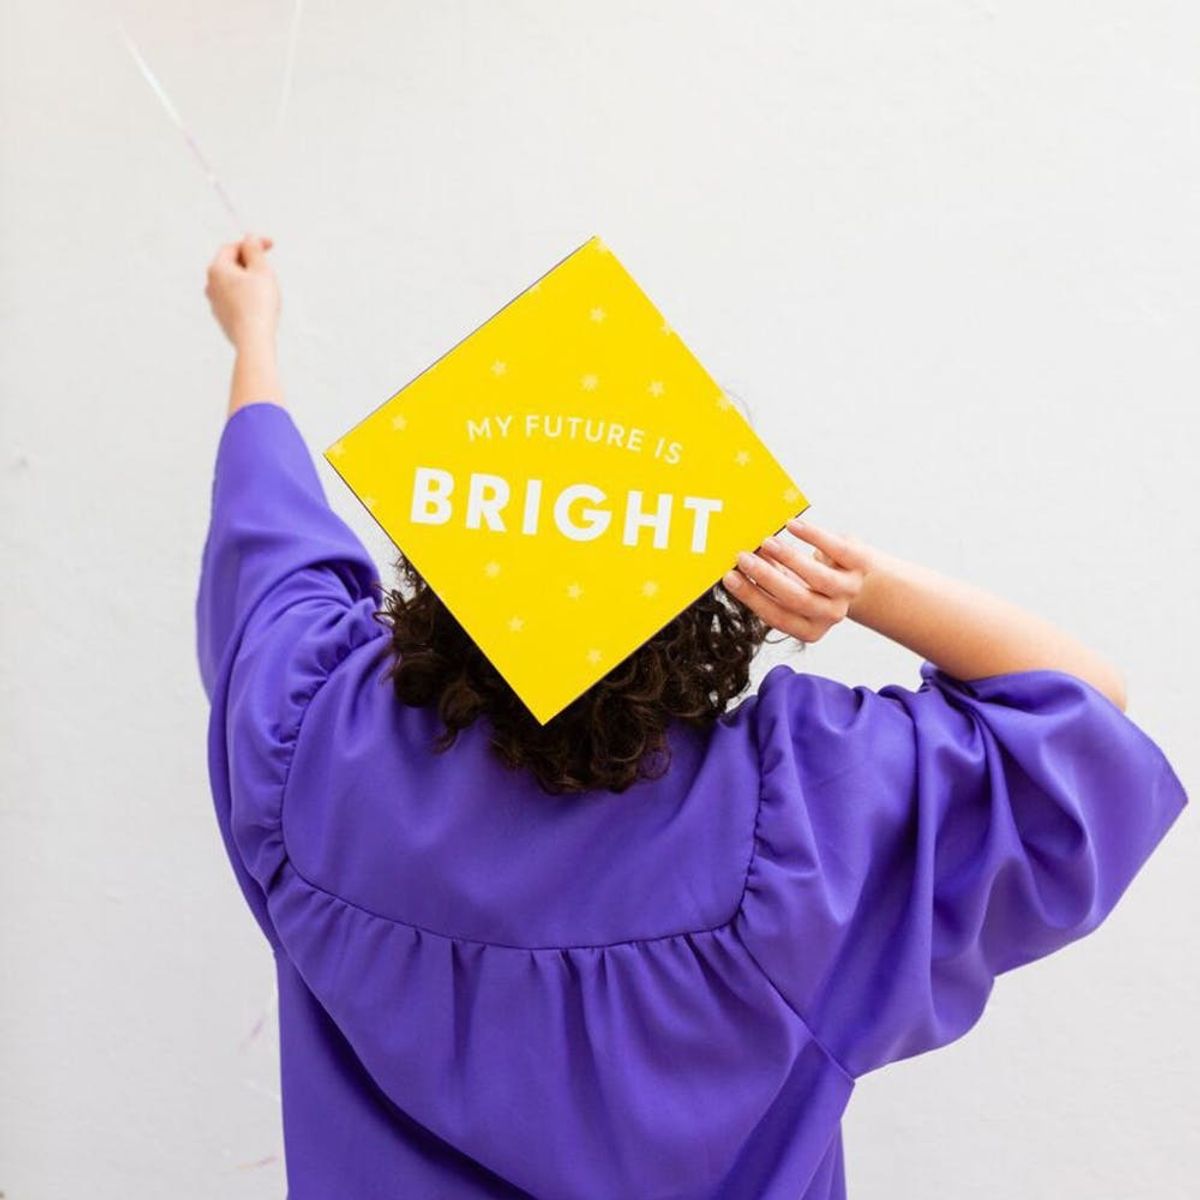 These Graduation Cap Designs Make the Perfect Celebratory Statement